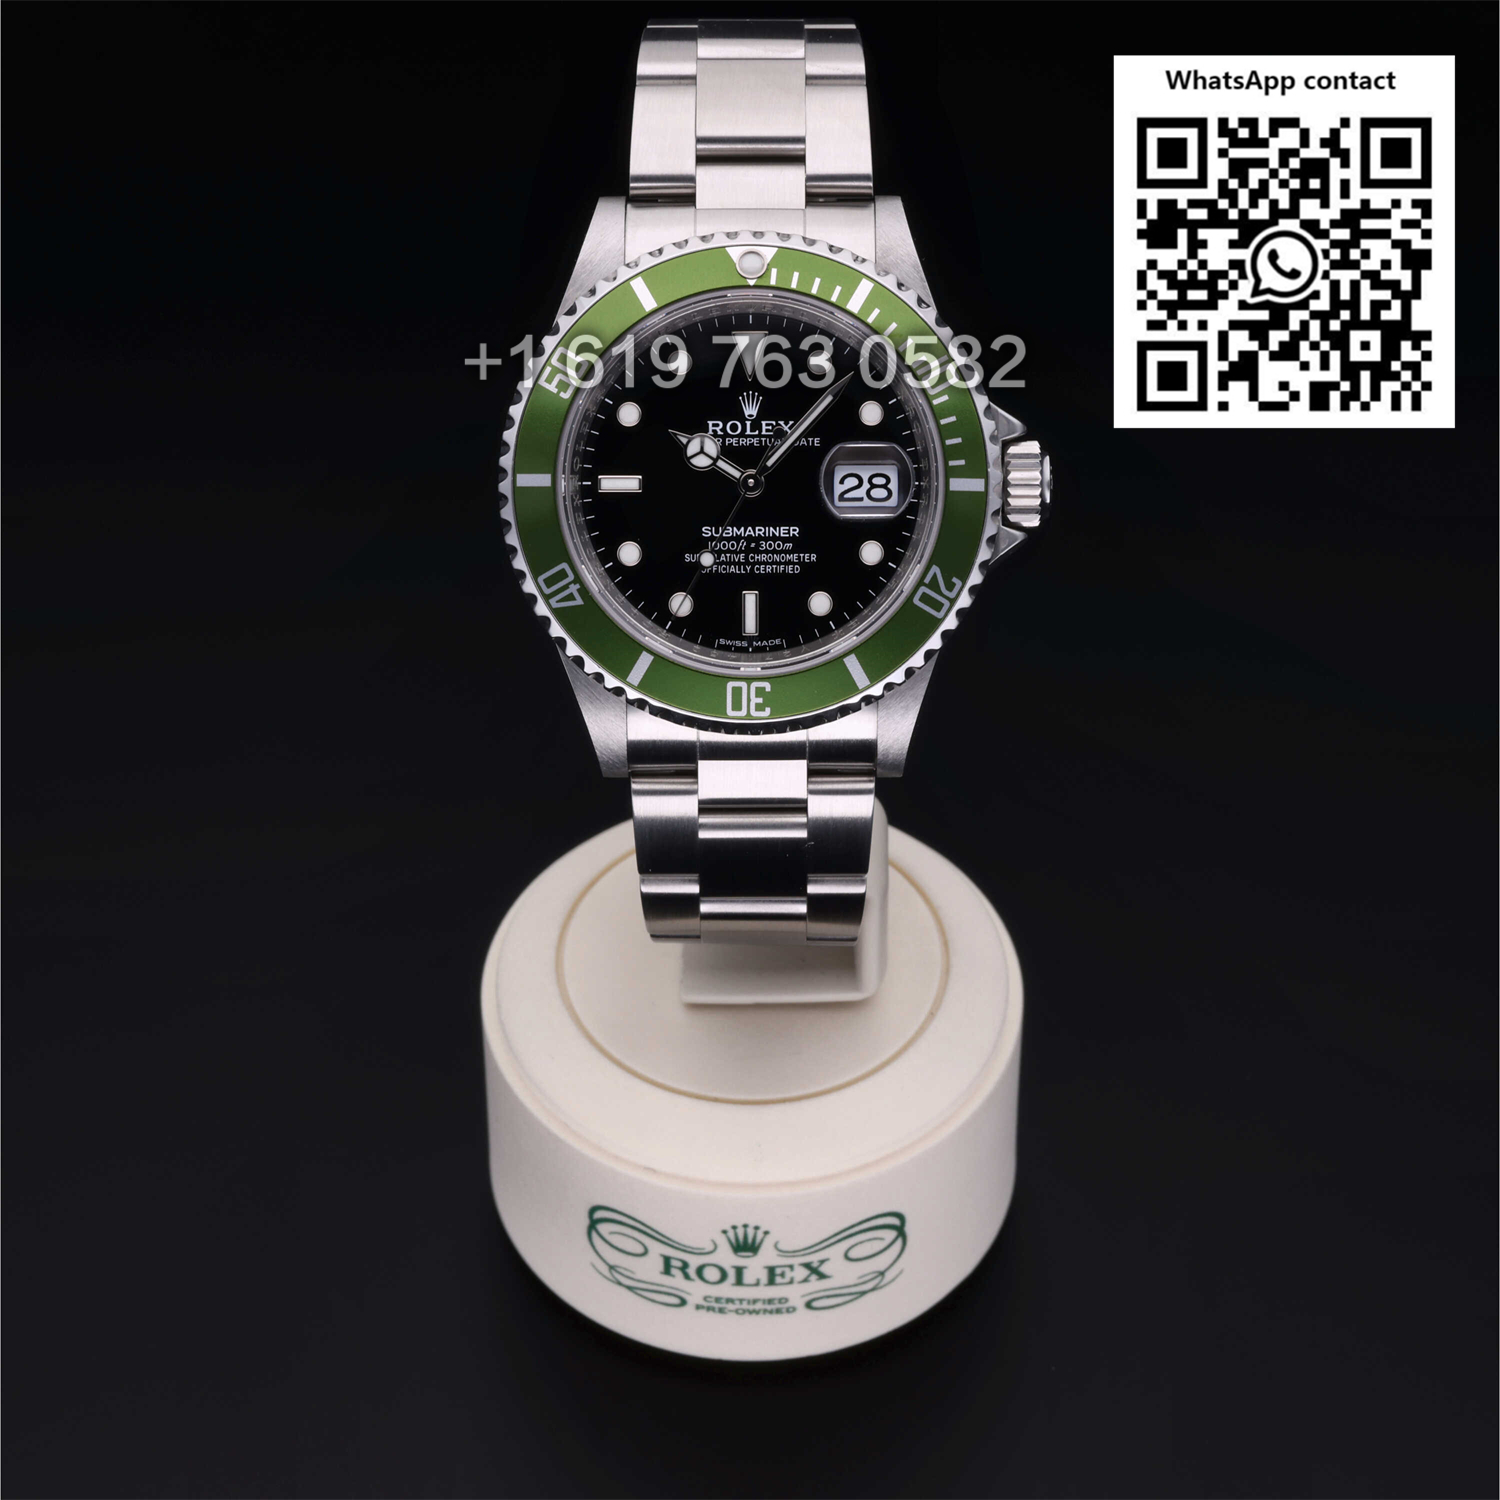 Rolex Submariner Kermit Green Bezel 50th Anniversary Mens Watch 16610LV Box Papers